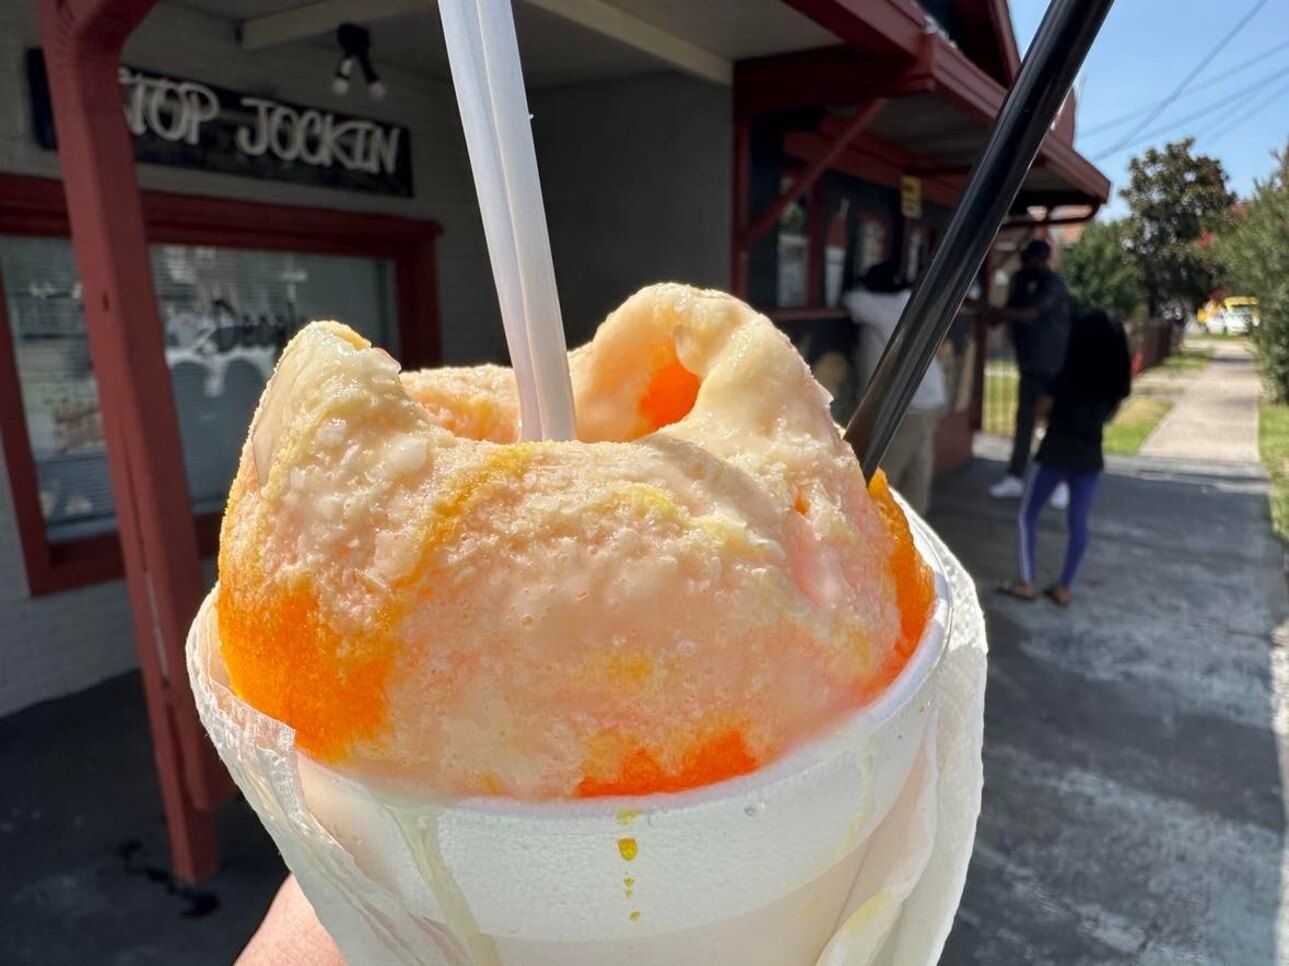 Photo shows an orange snoball with cream at Stop Jockin